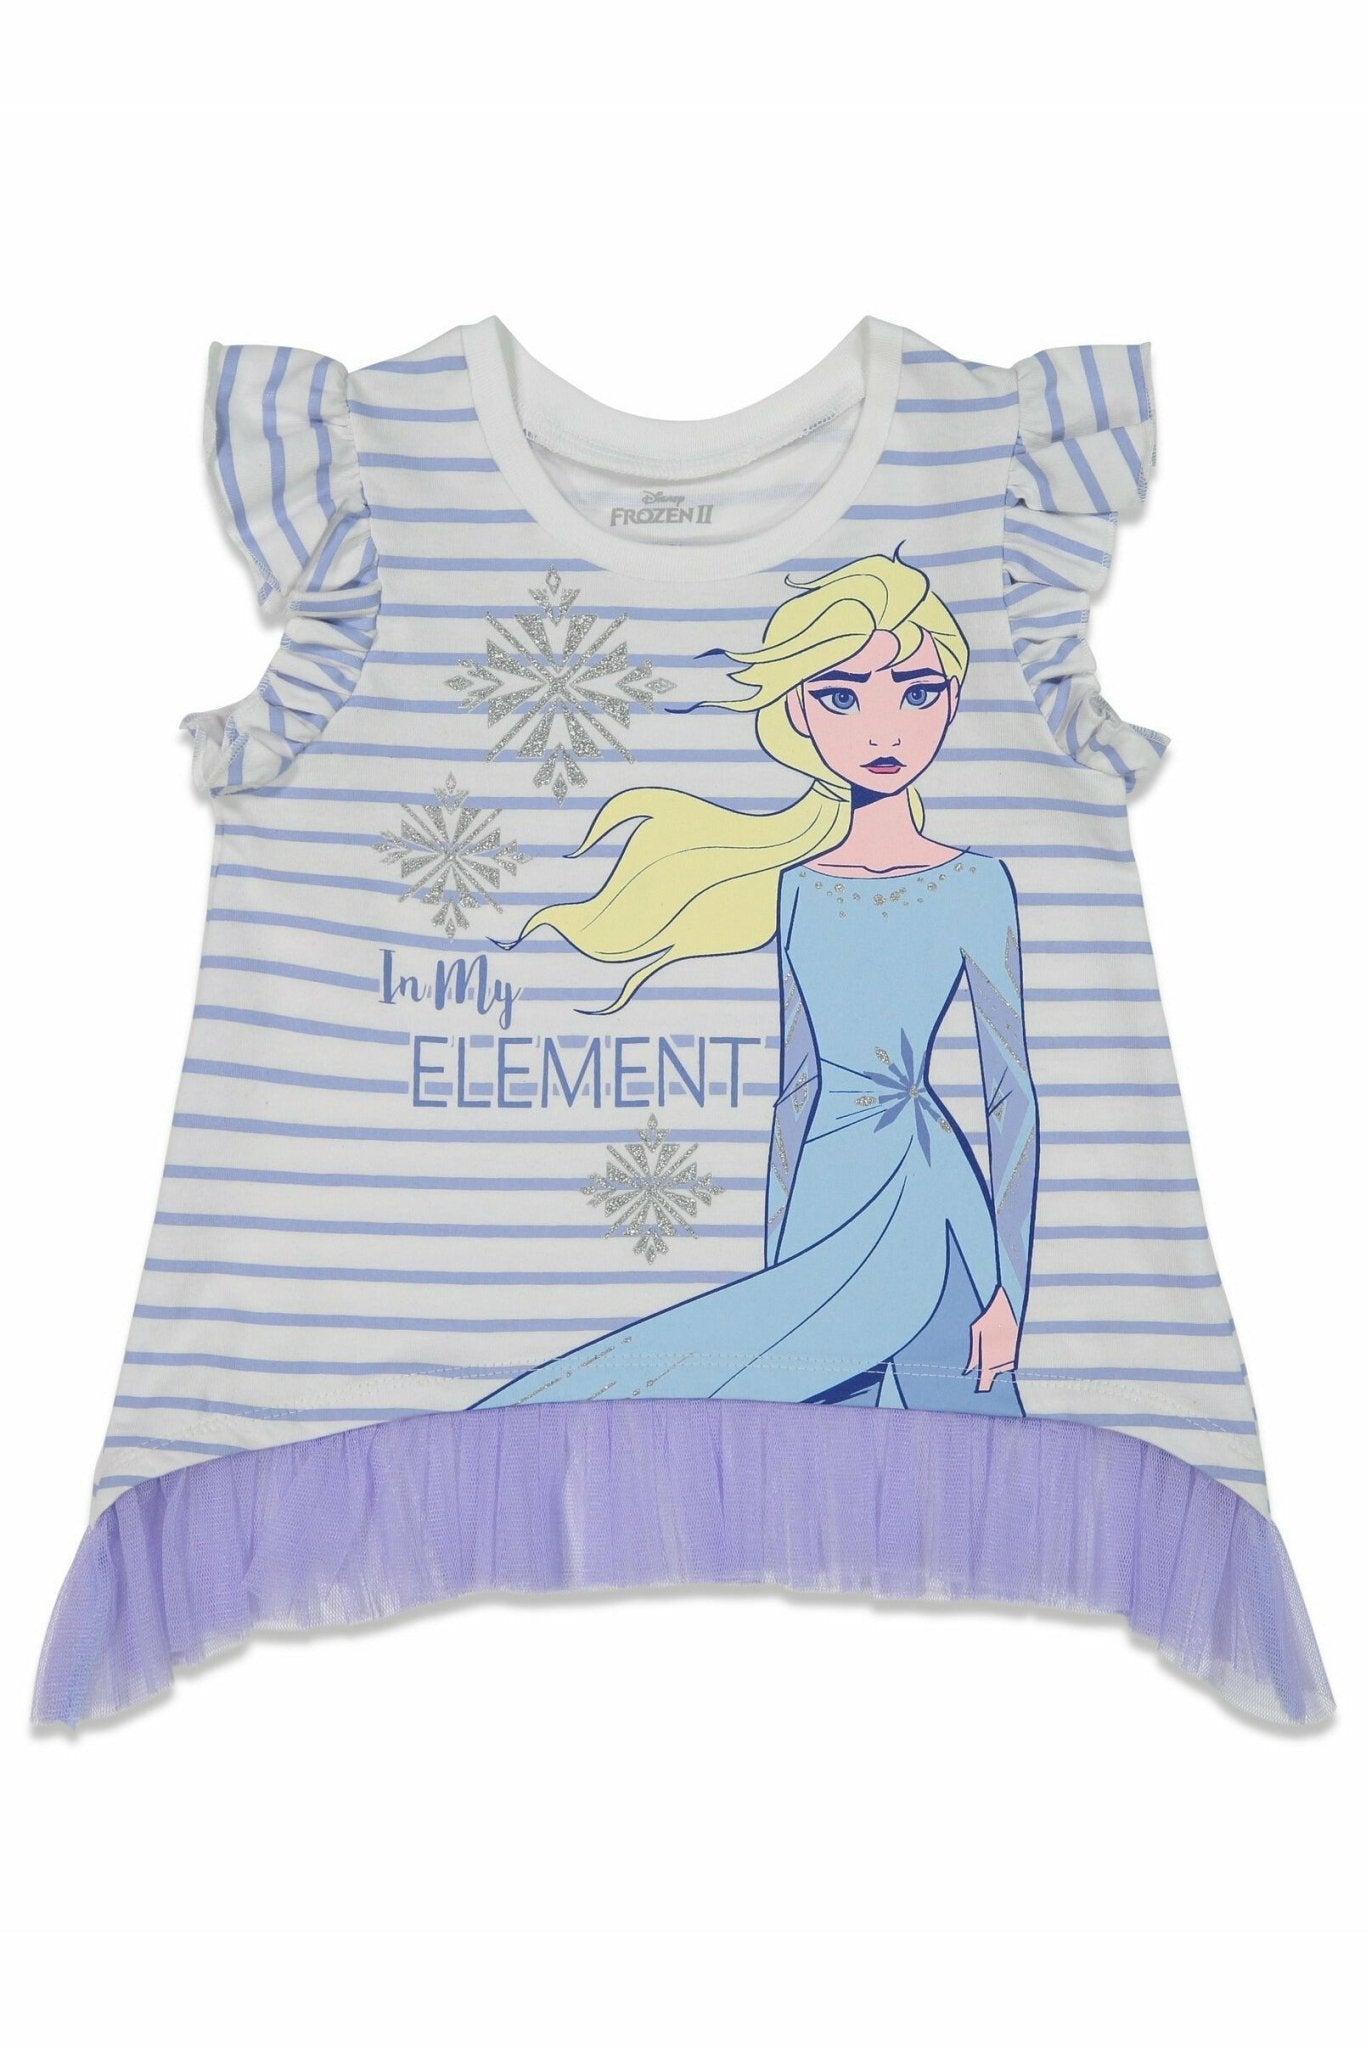 Frozen Elsa Sleeveless Graphic T-Shirt & Shorts Set - imagikids